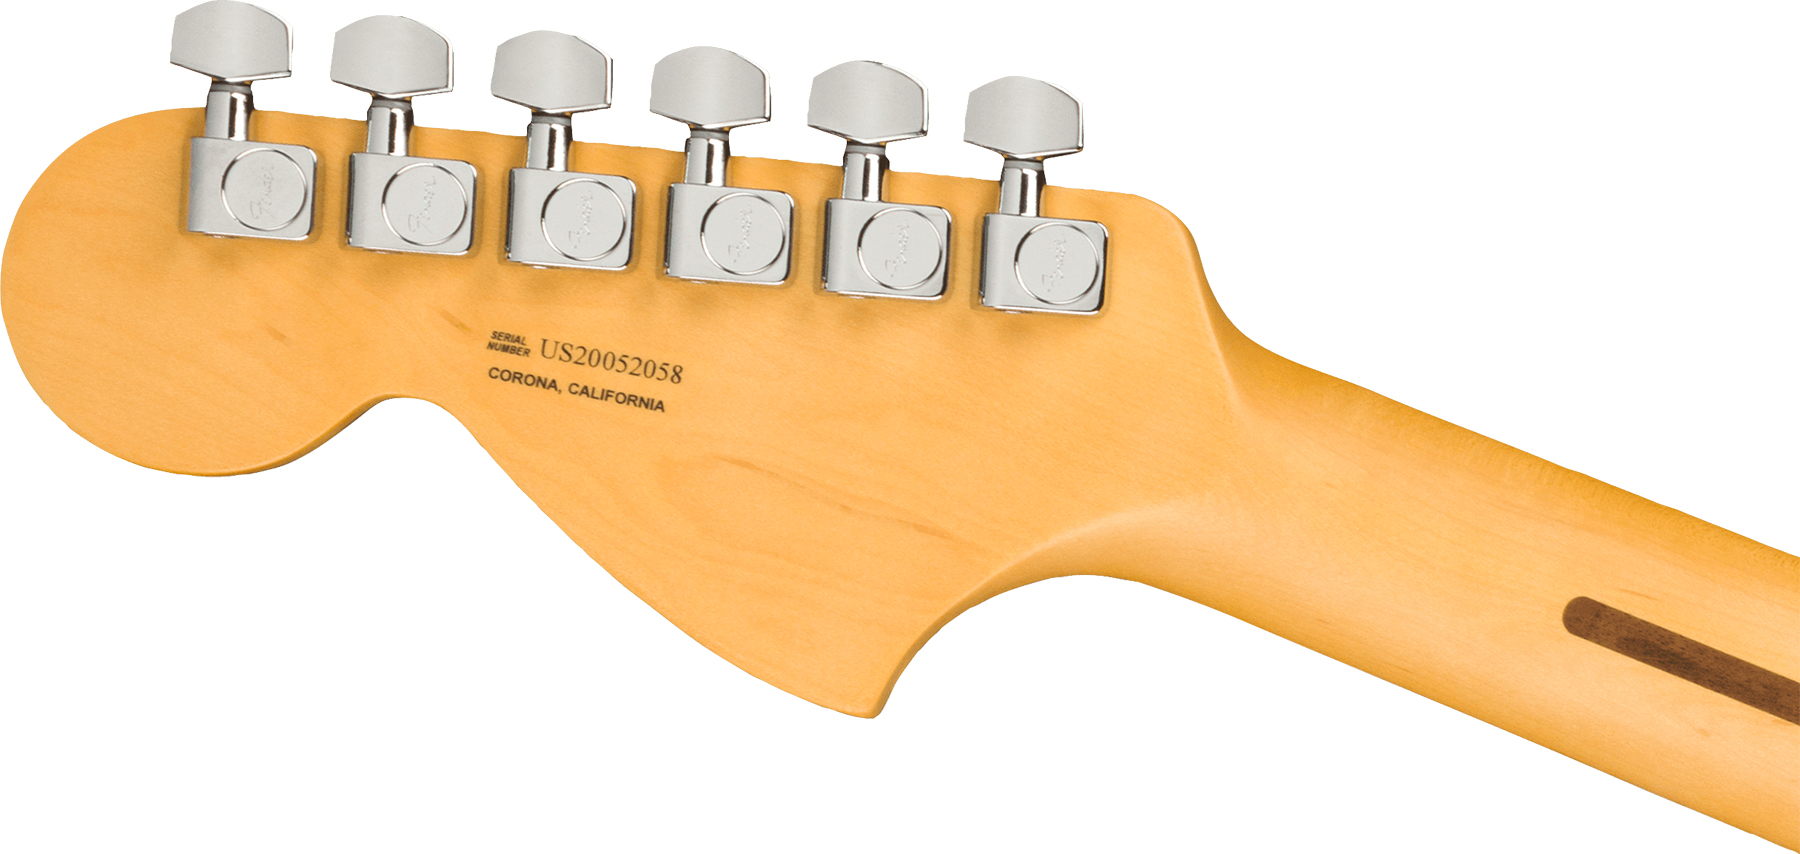 Fender Tele Deluxe American Professional Ii Usa Mn - Mystic Surf Green - Guitarra eléctrica con forma de tel - Variation 1